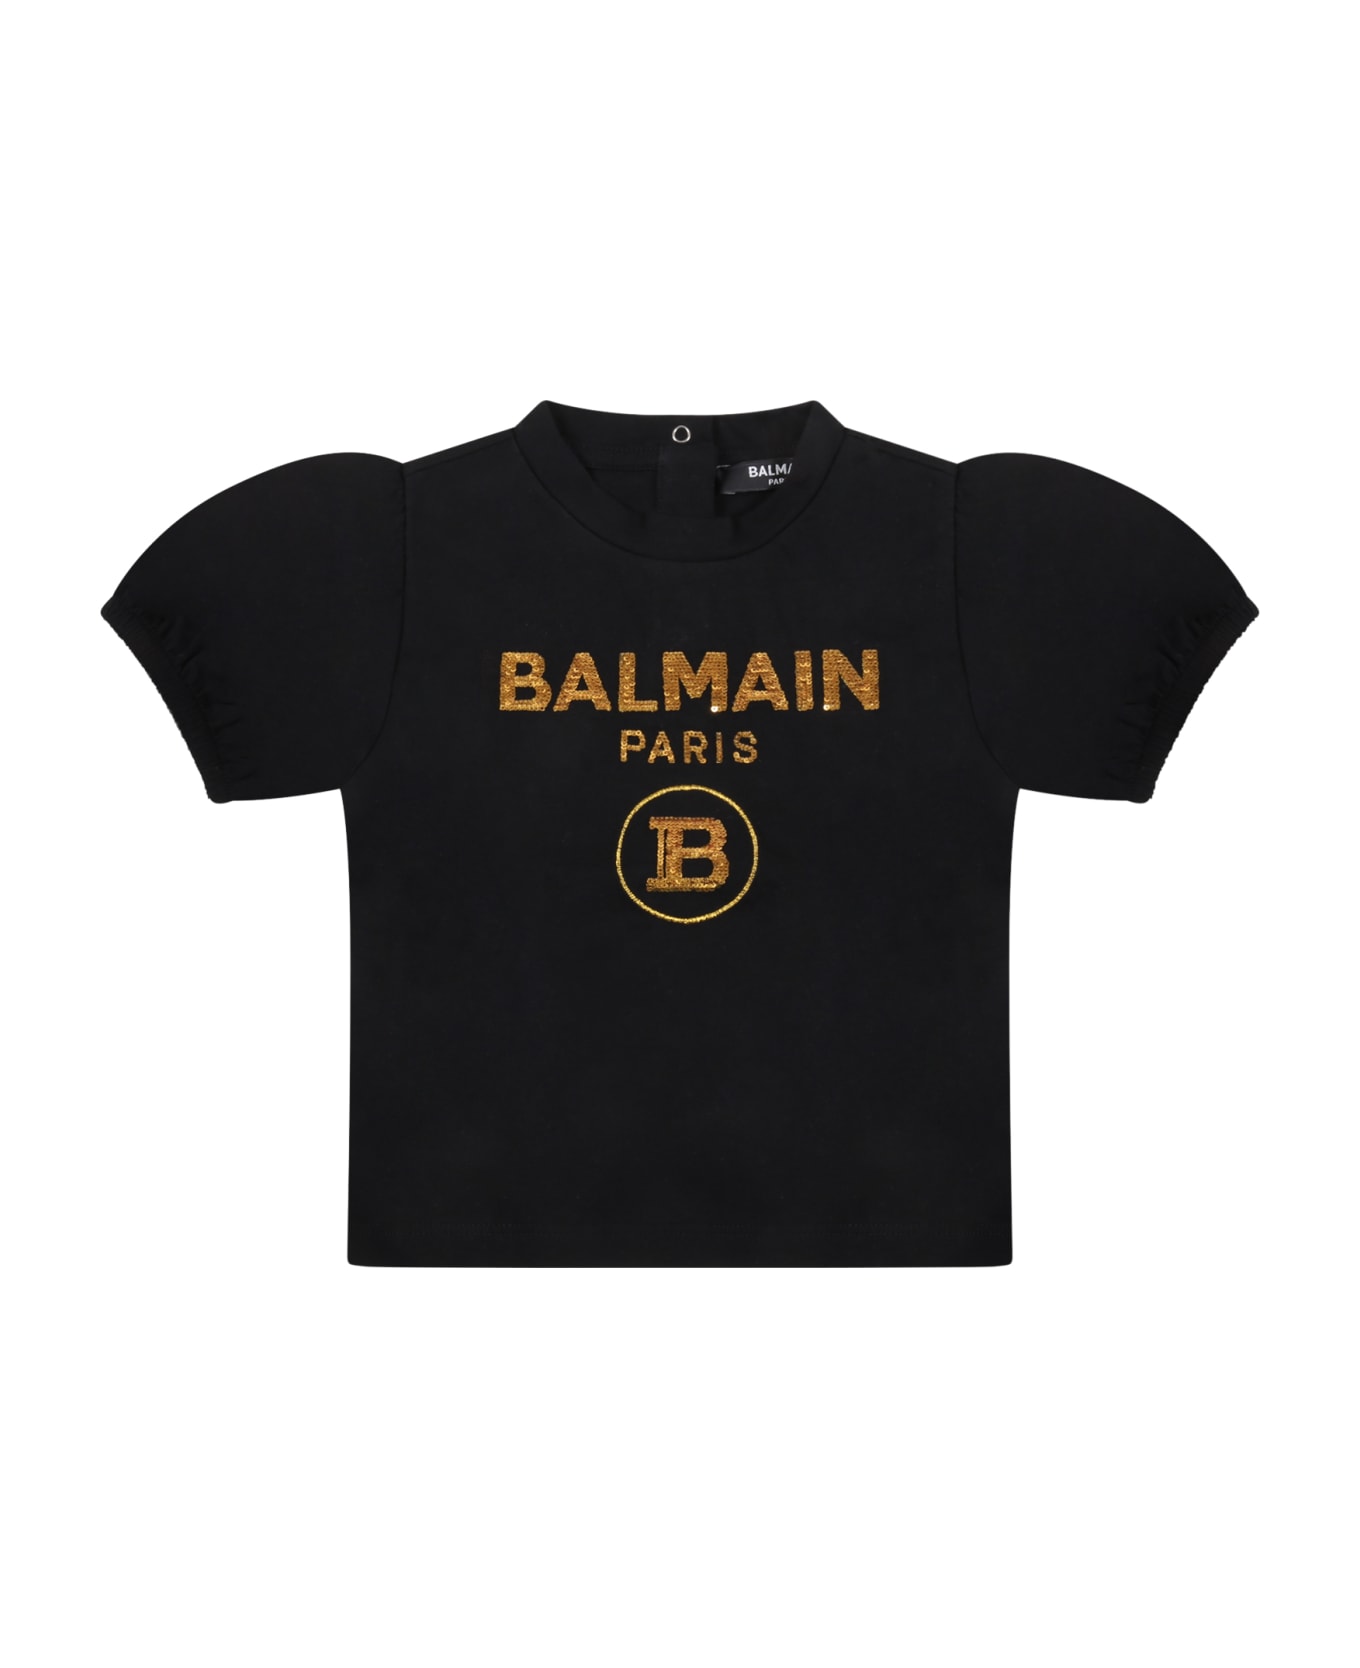 Balmain Black T-shirt For Baby Girl With Gold Logo - Black